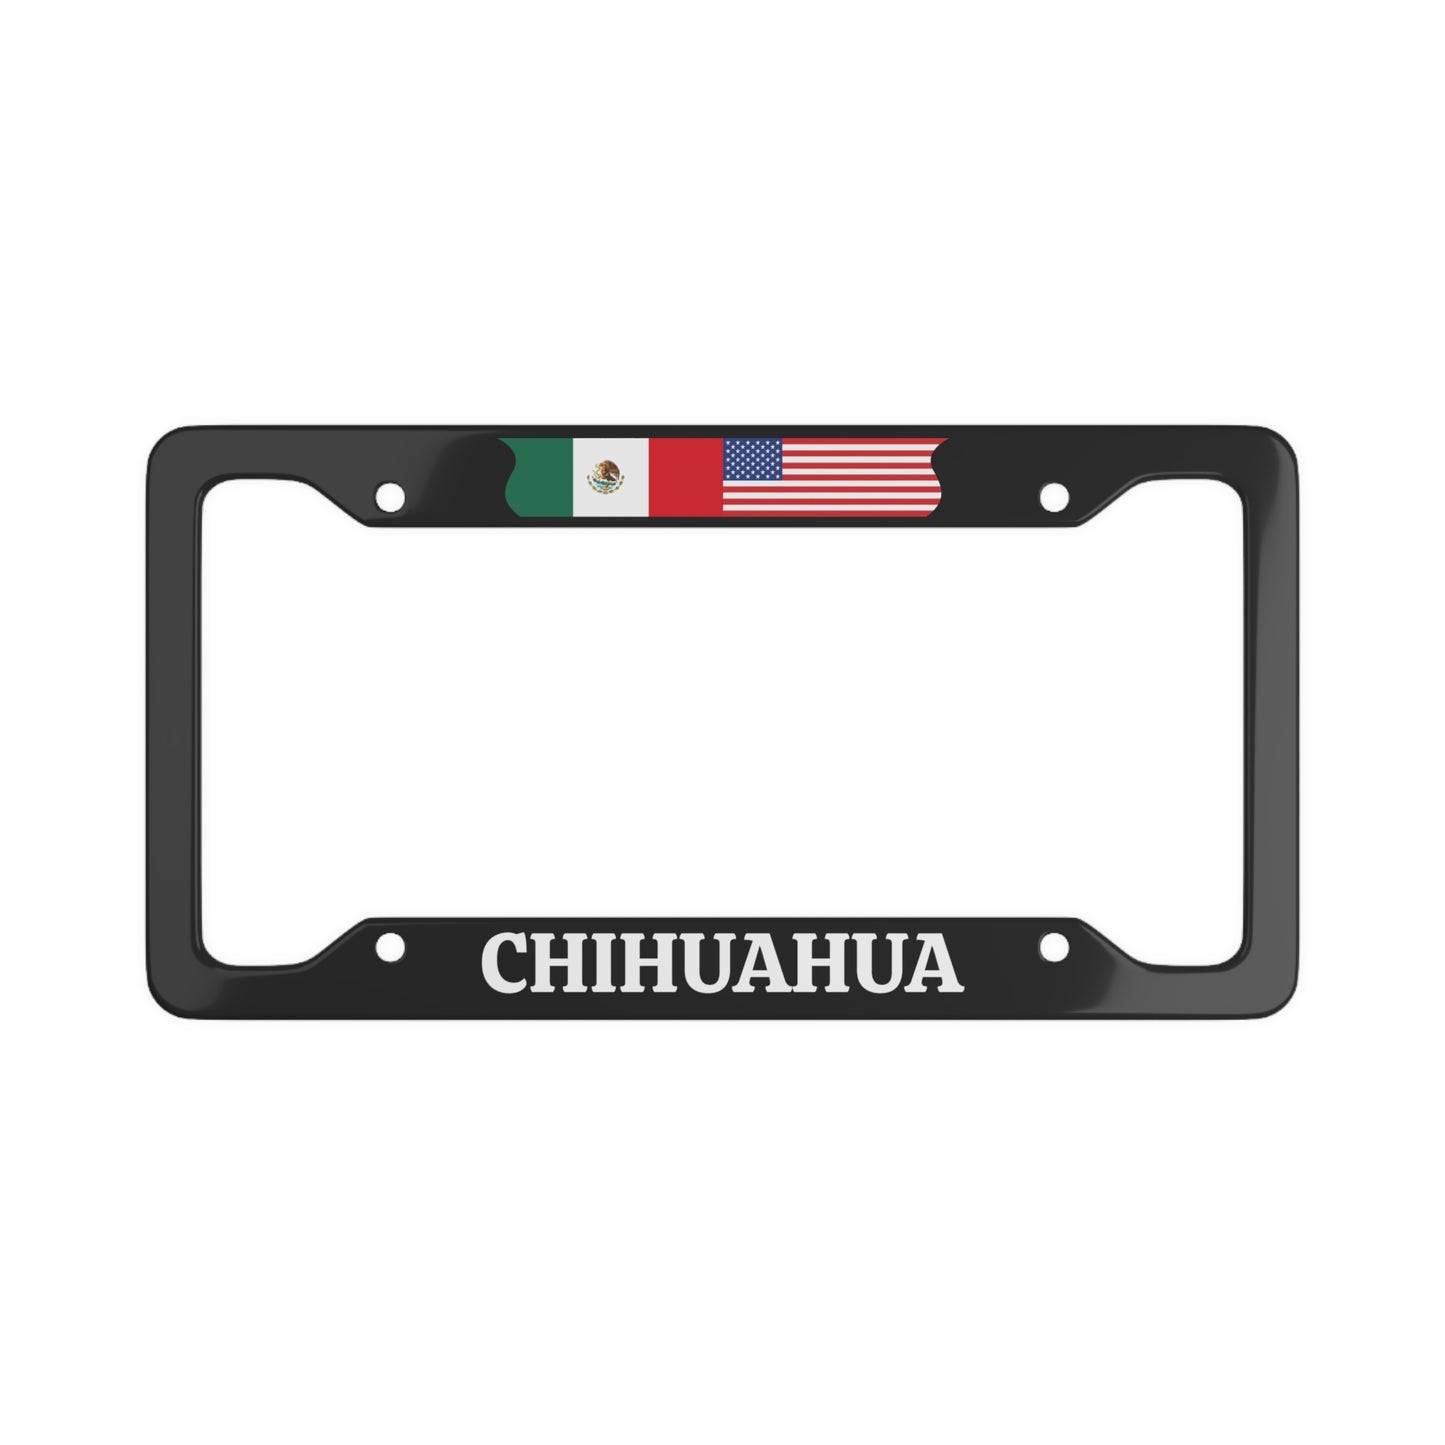 Chihuahua License Plate Frame